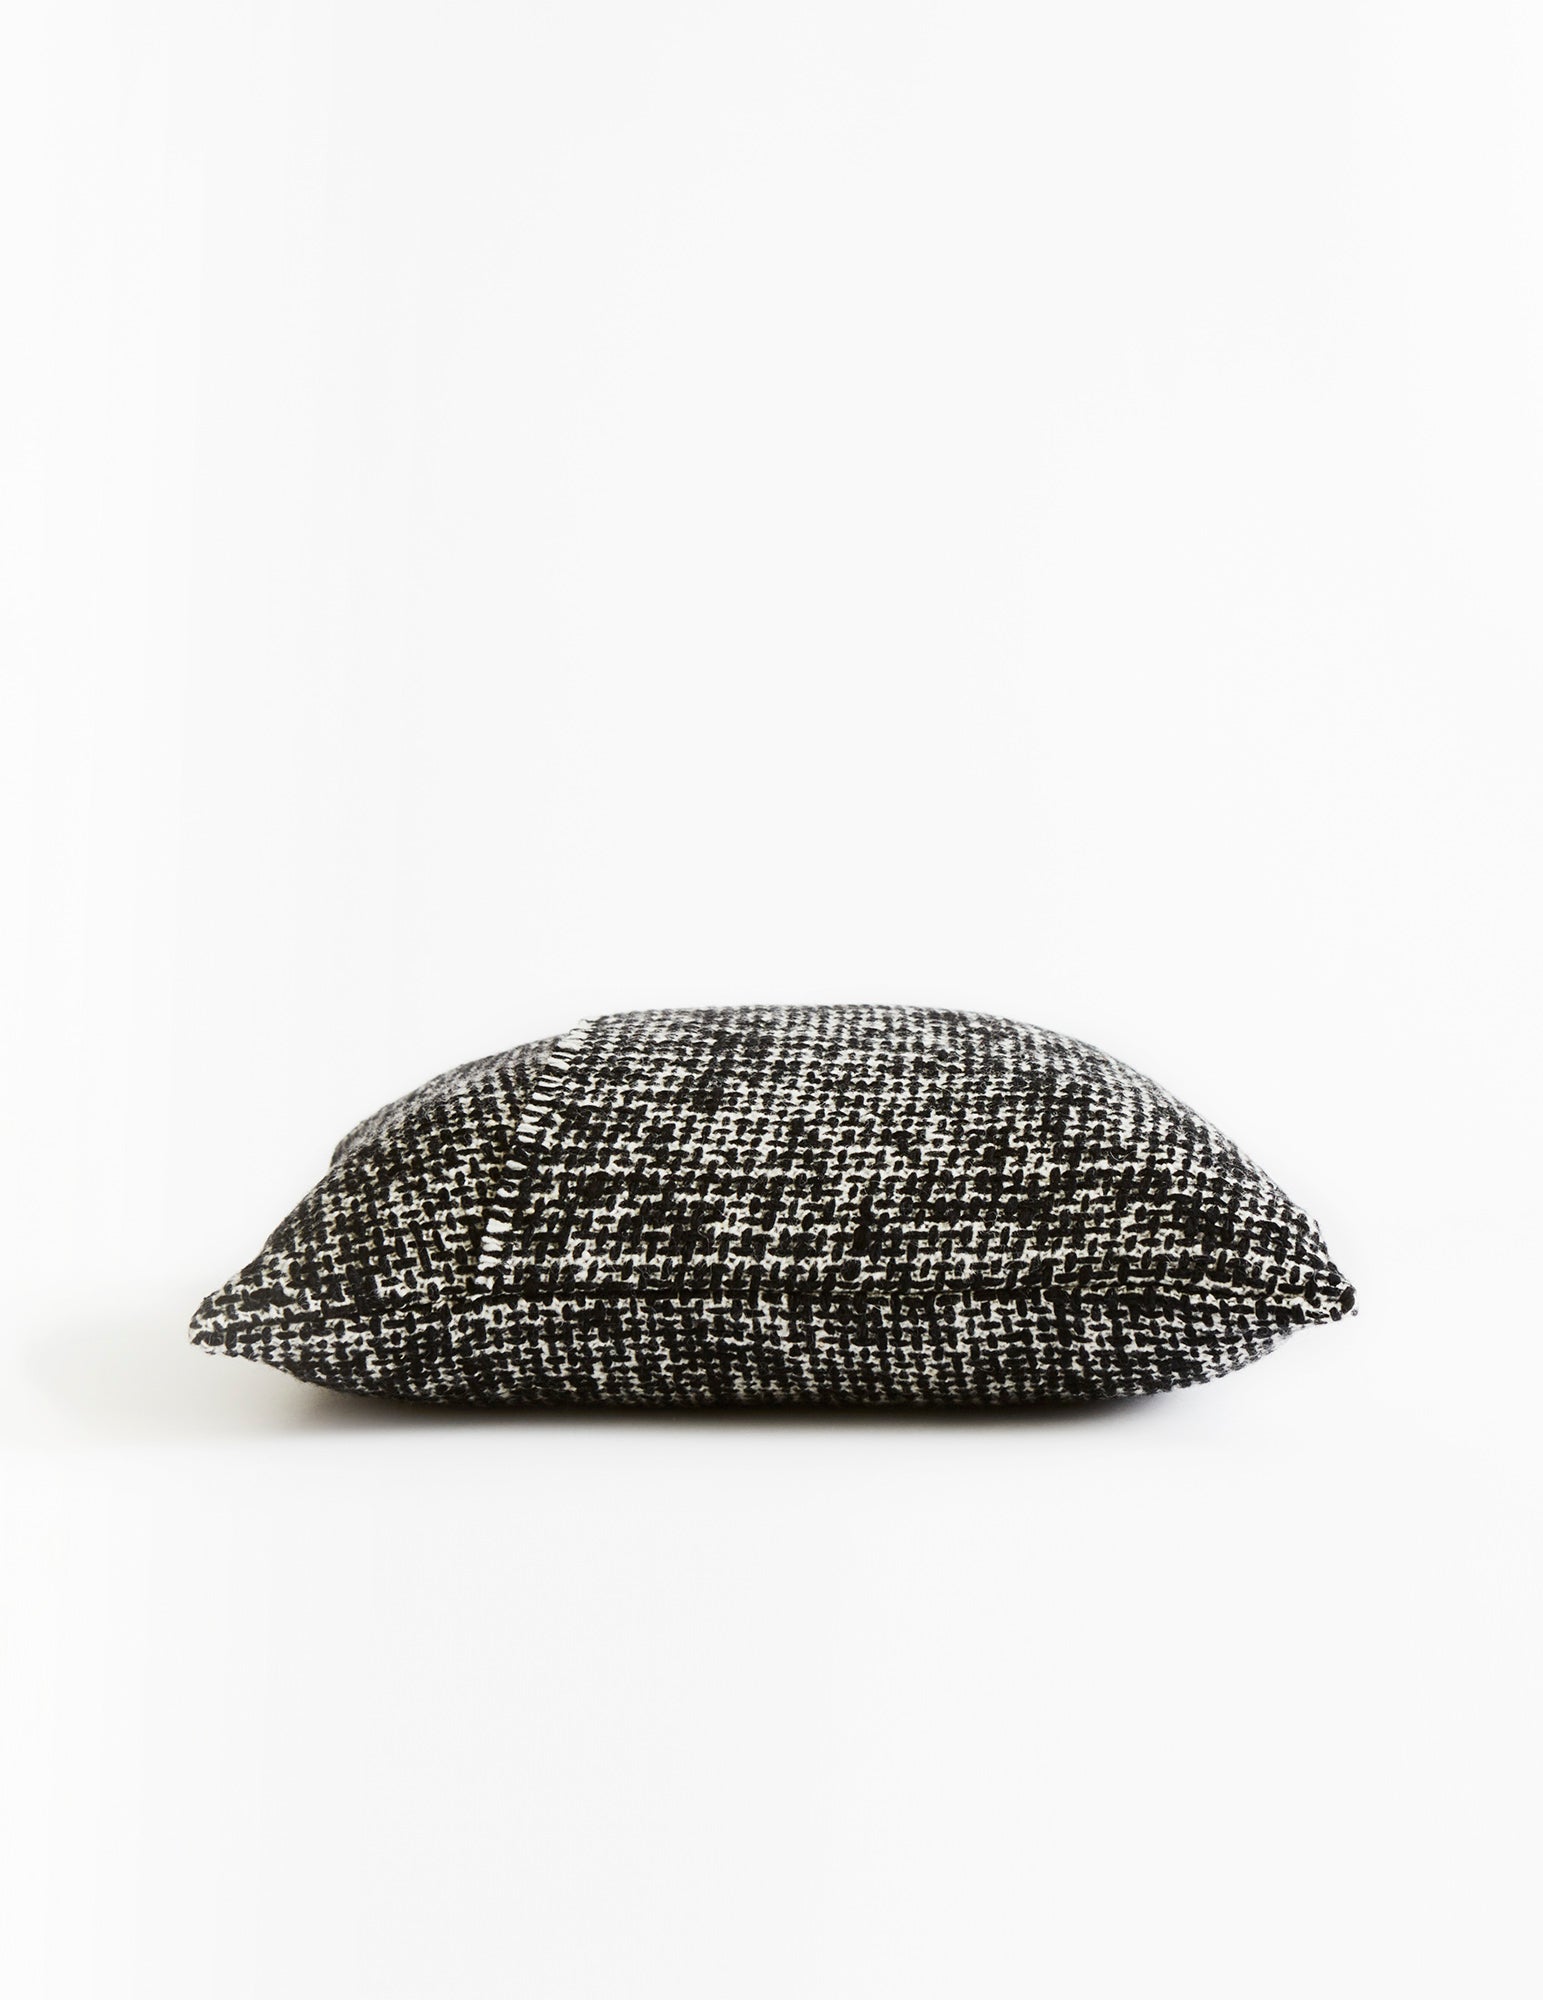 Mended Tweed Cushion - Monochrome V